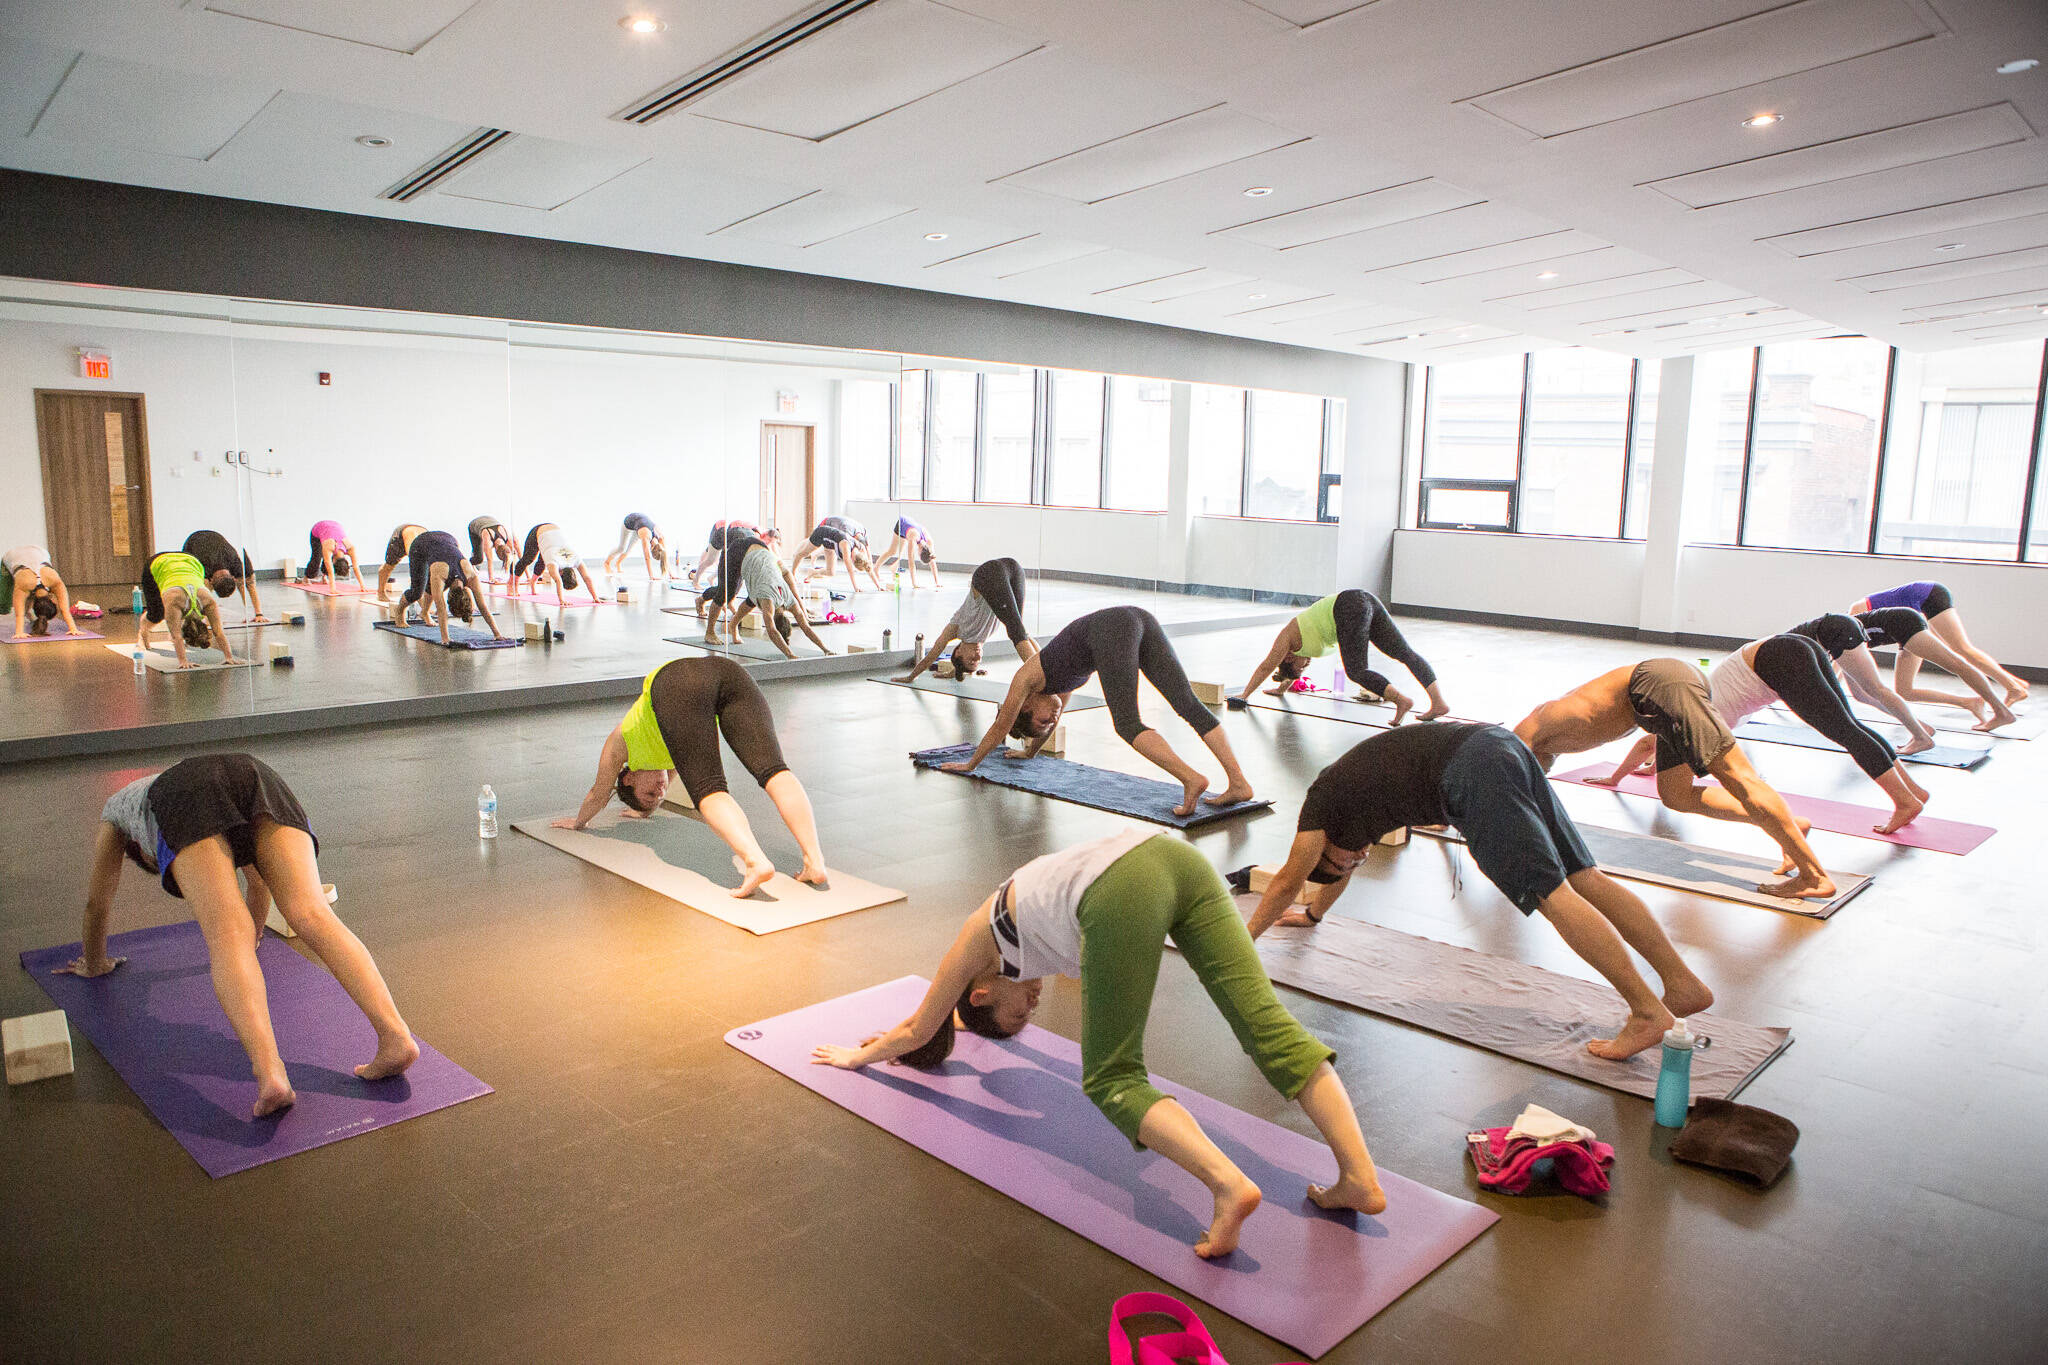 Why Hot Yoga is different from Bikram Yoga - Myoga Studio & Lifestyle